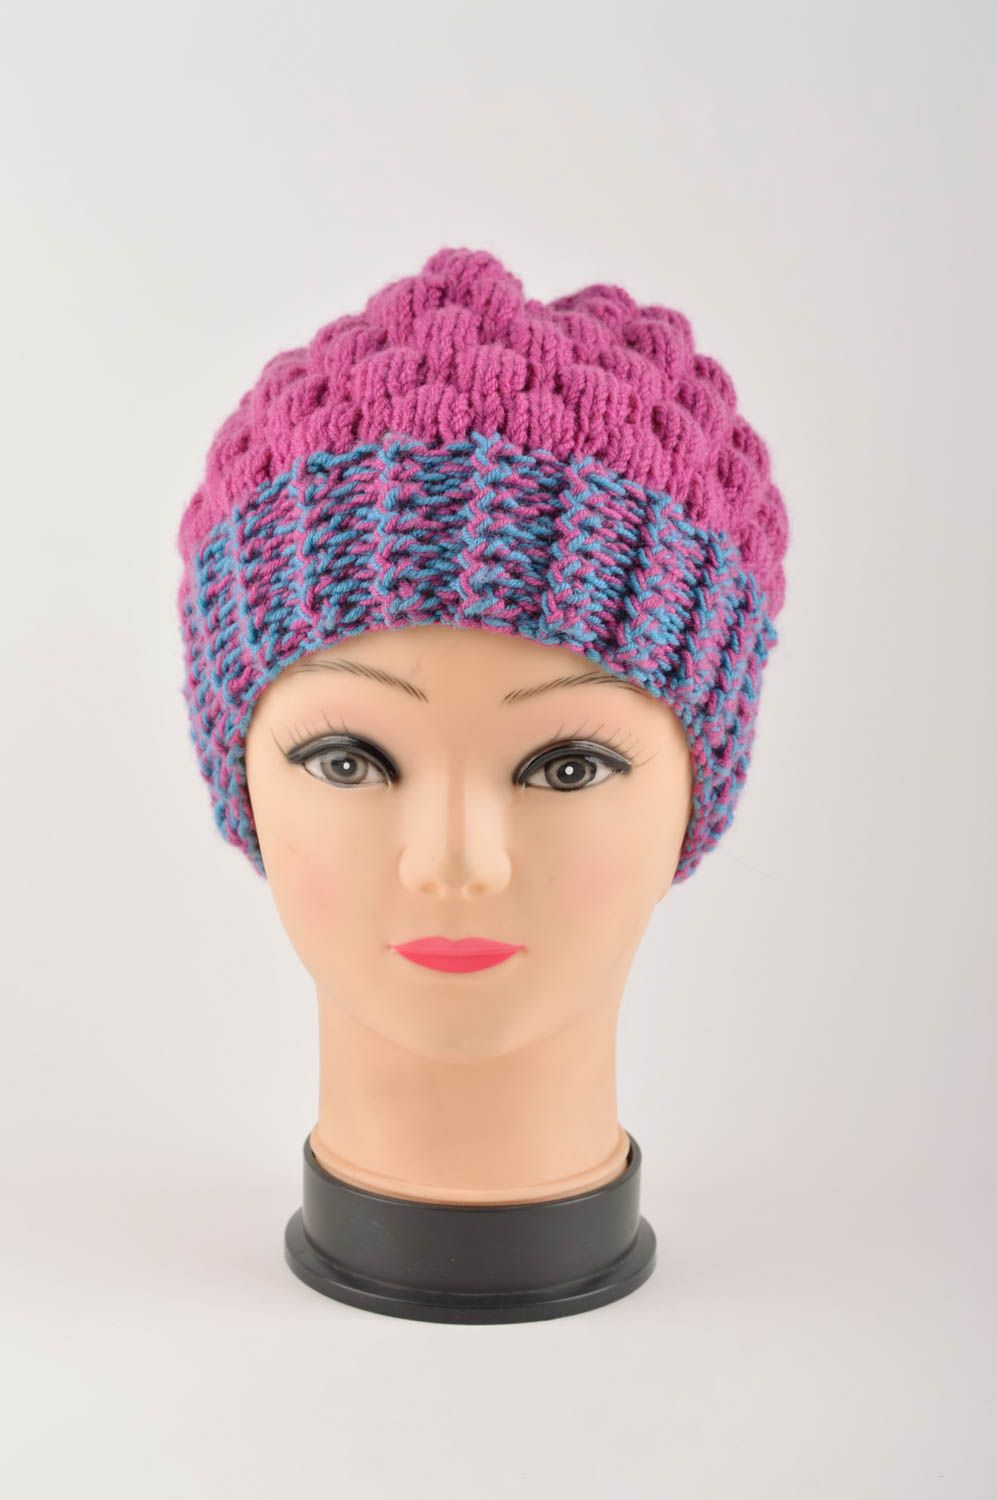 Handmade hat winter hat for girls unusual gift designer hat gift ideas  photo 3